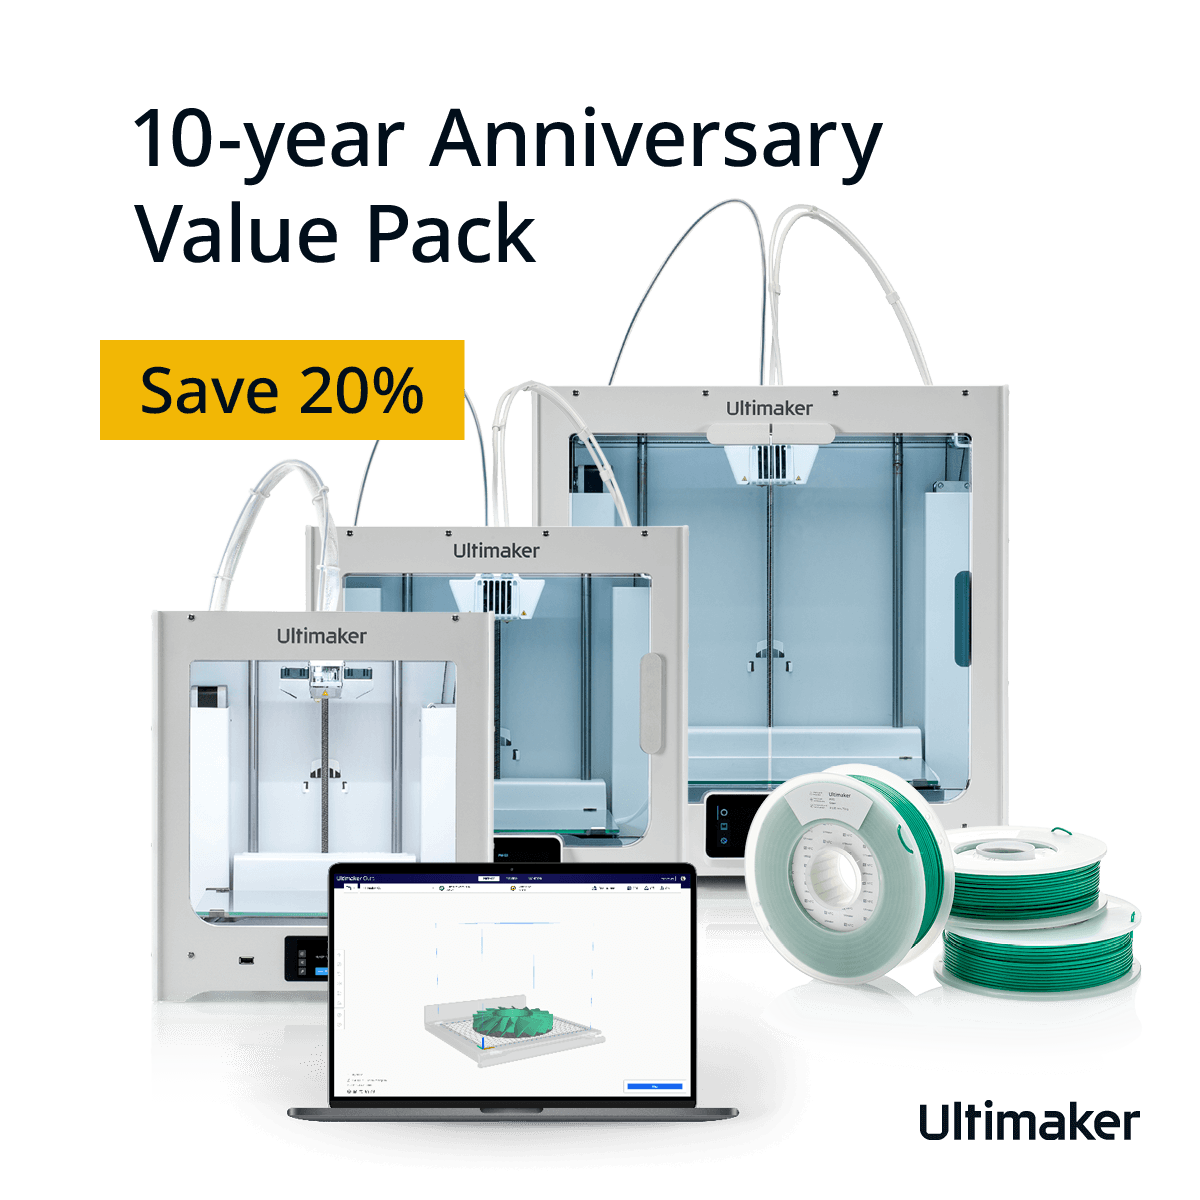 Ultimaker 3D printer 10 year anniversary sale